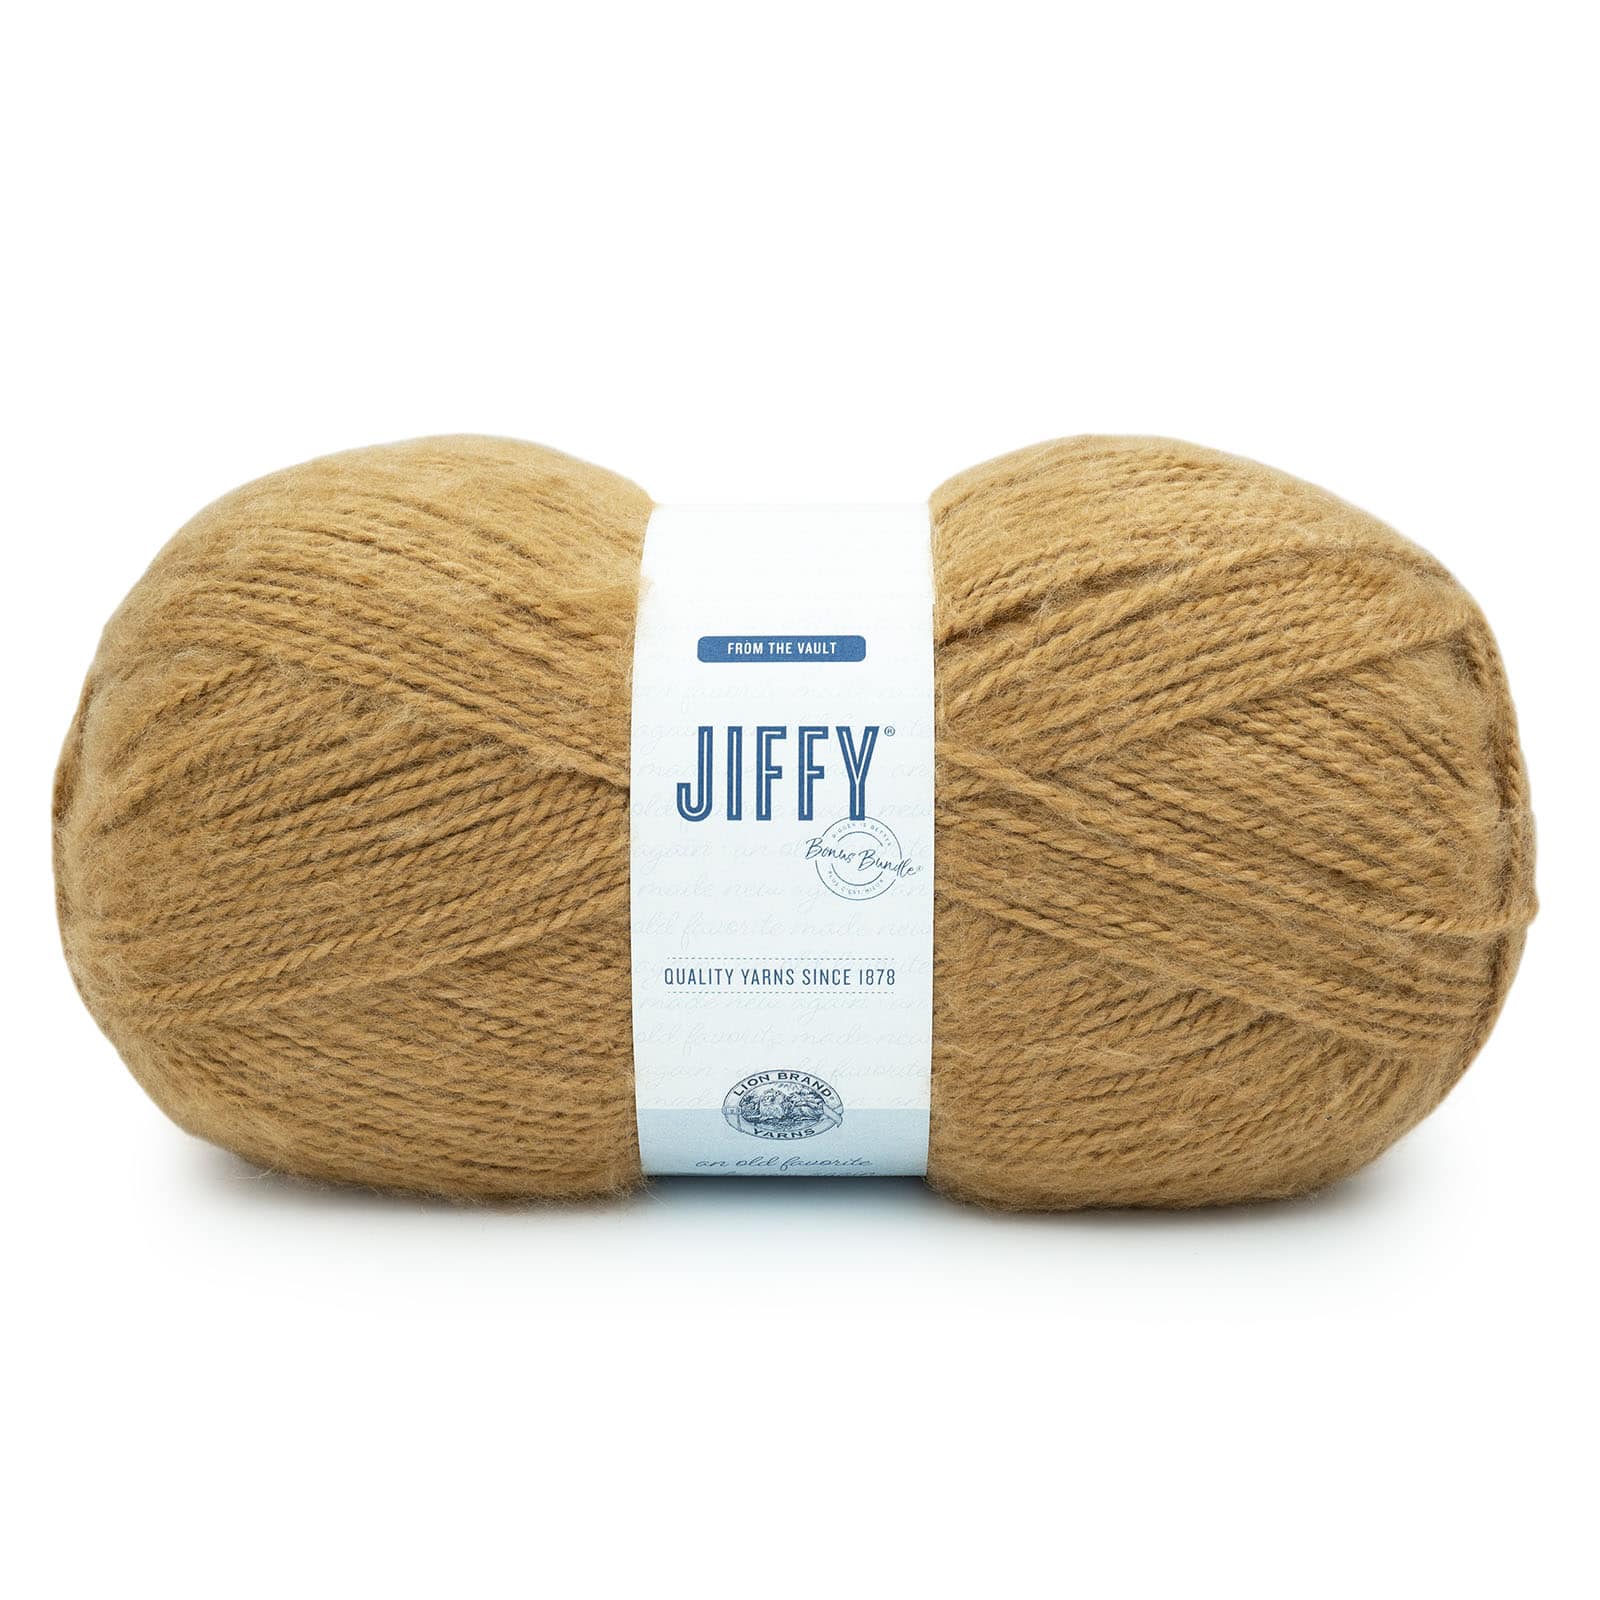 Lion Brand Jiffy Bonus Bundle Yarn